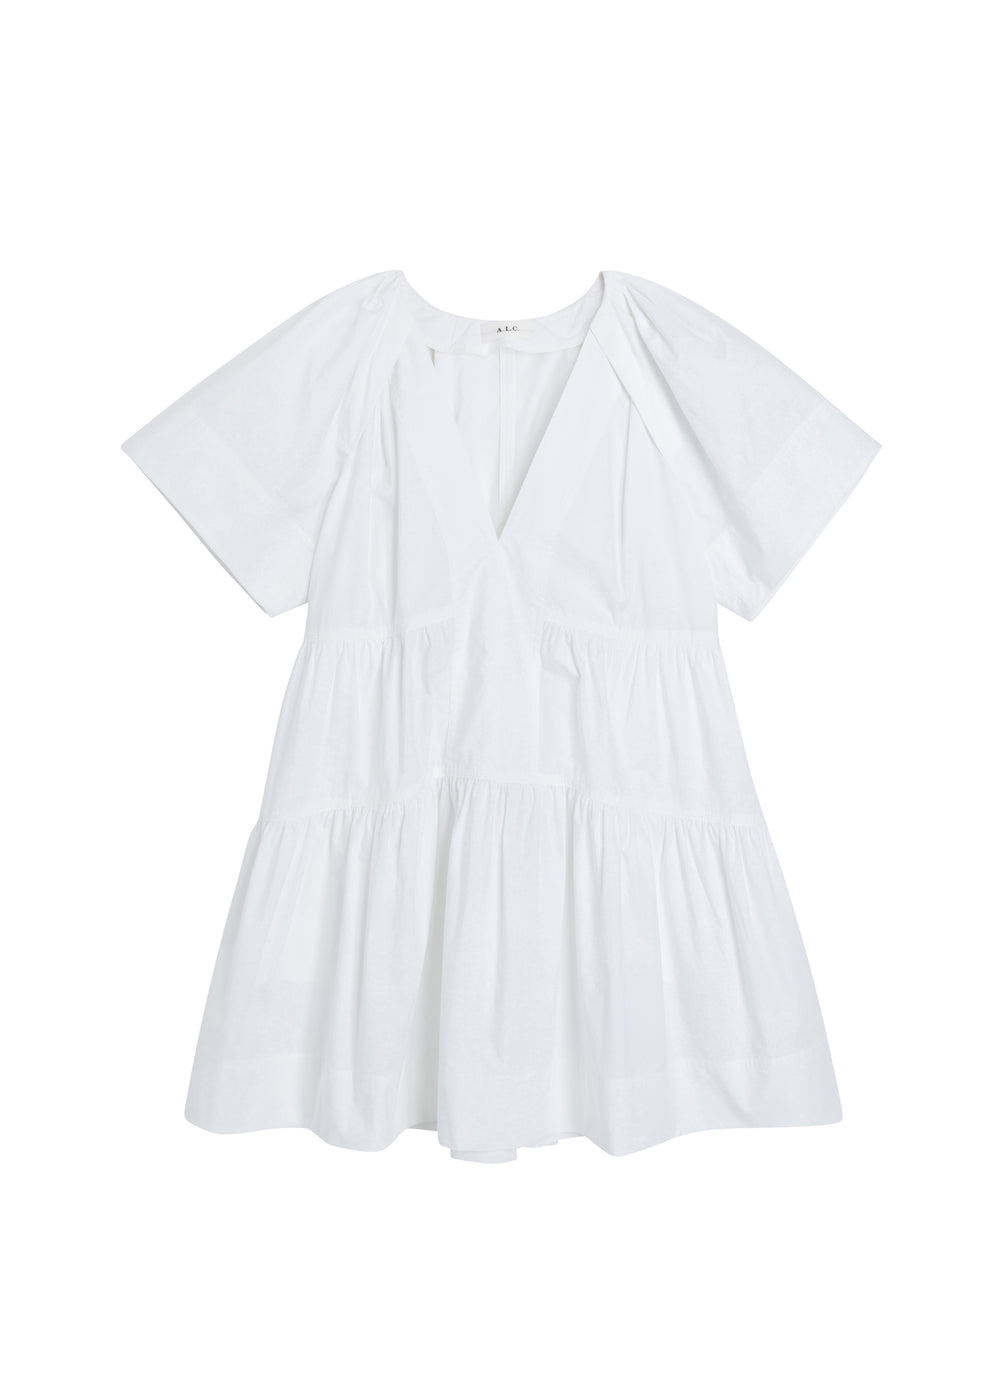 flatlay of white short sleeve mini dress